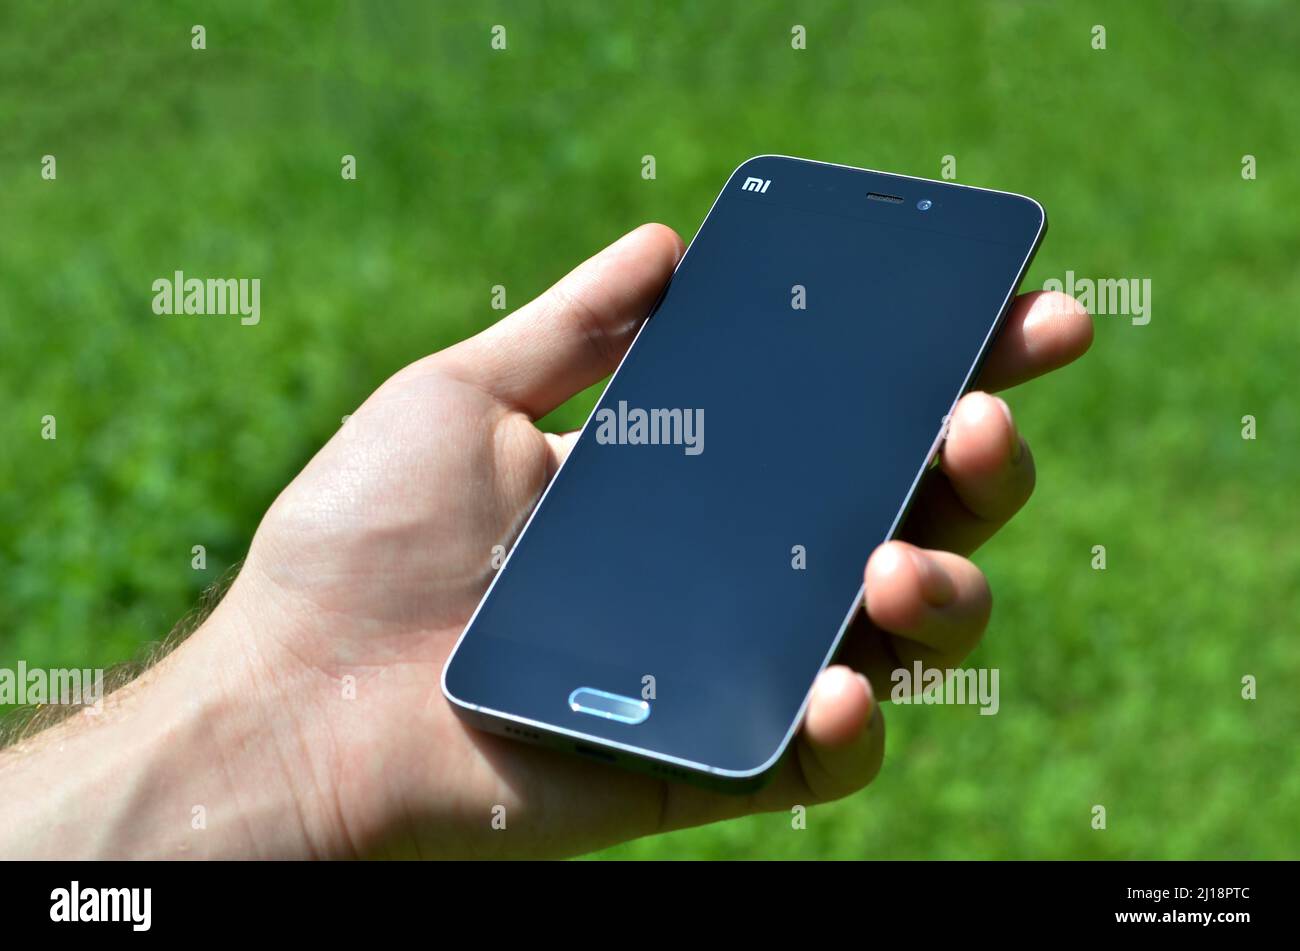 chinese Smartphone Xiaomi Mi 5 in male hand Stock Photo - Alamy